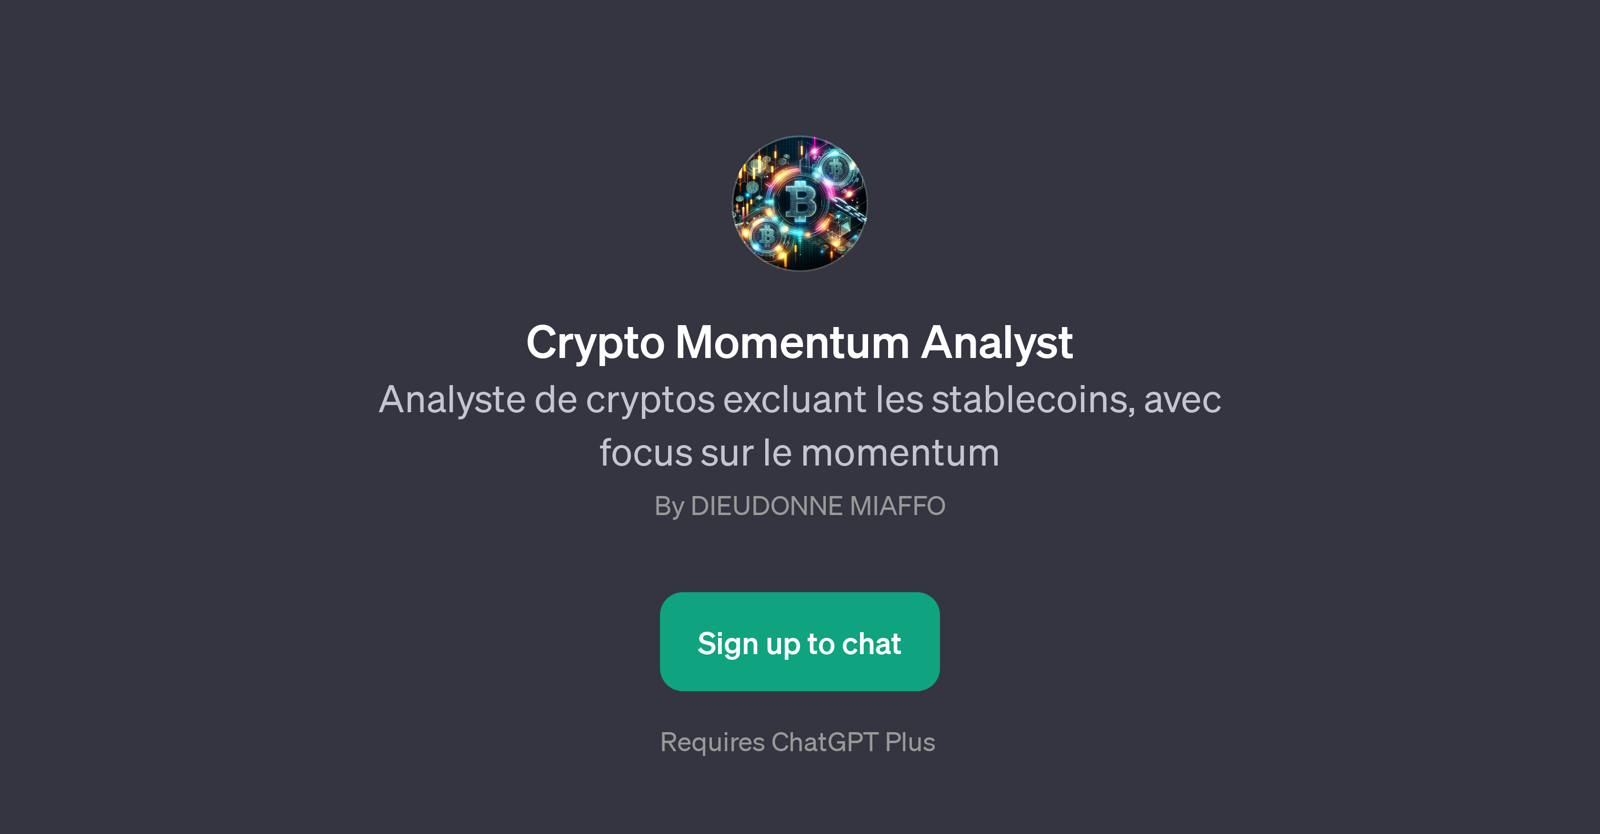 Crypto Momentum Analyst website